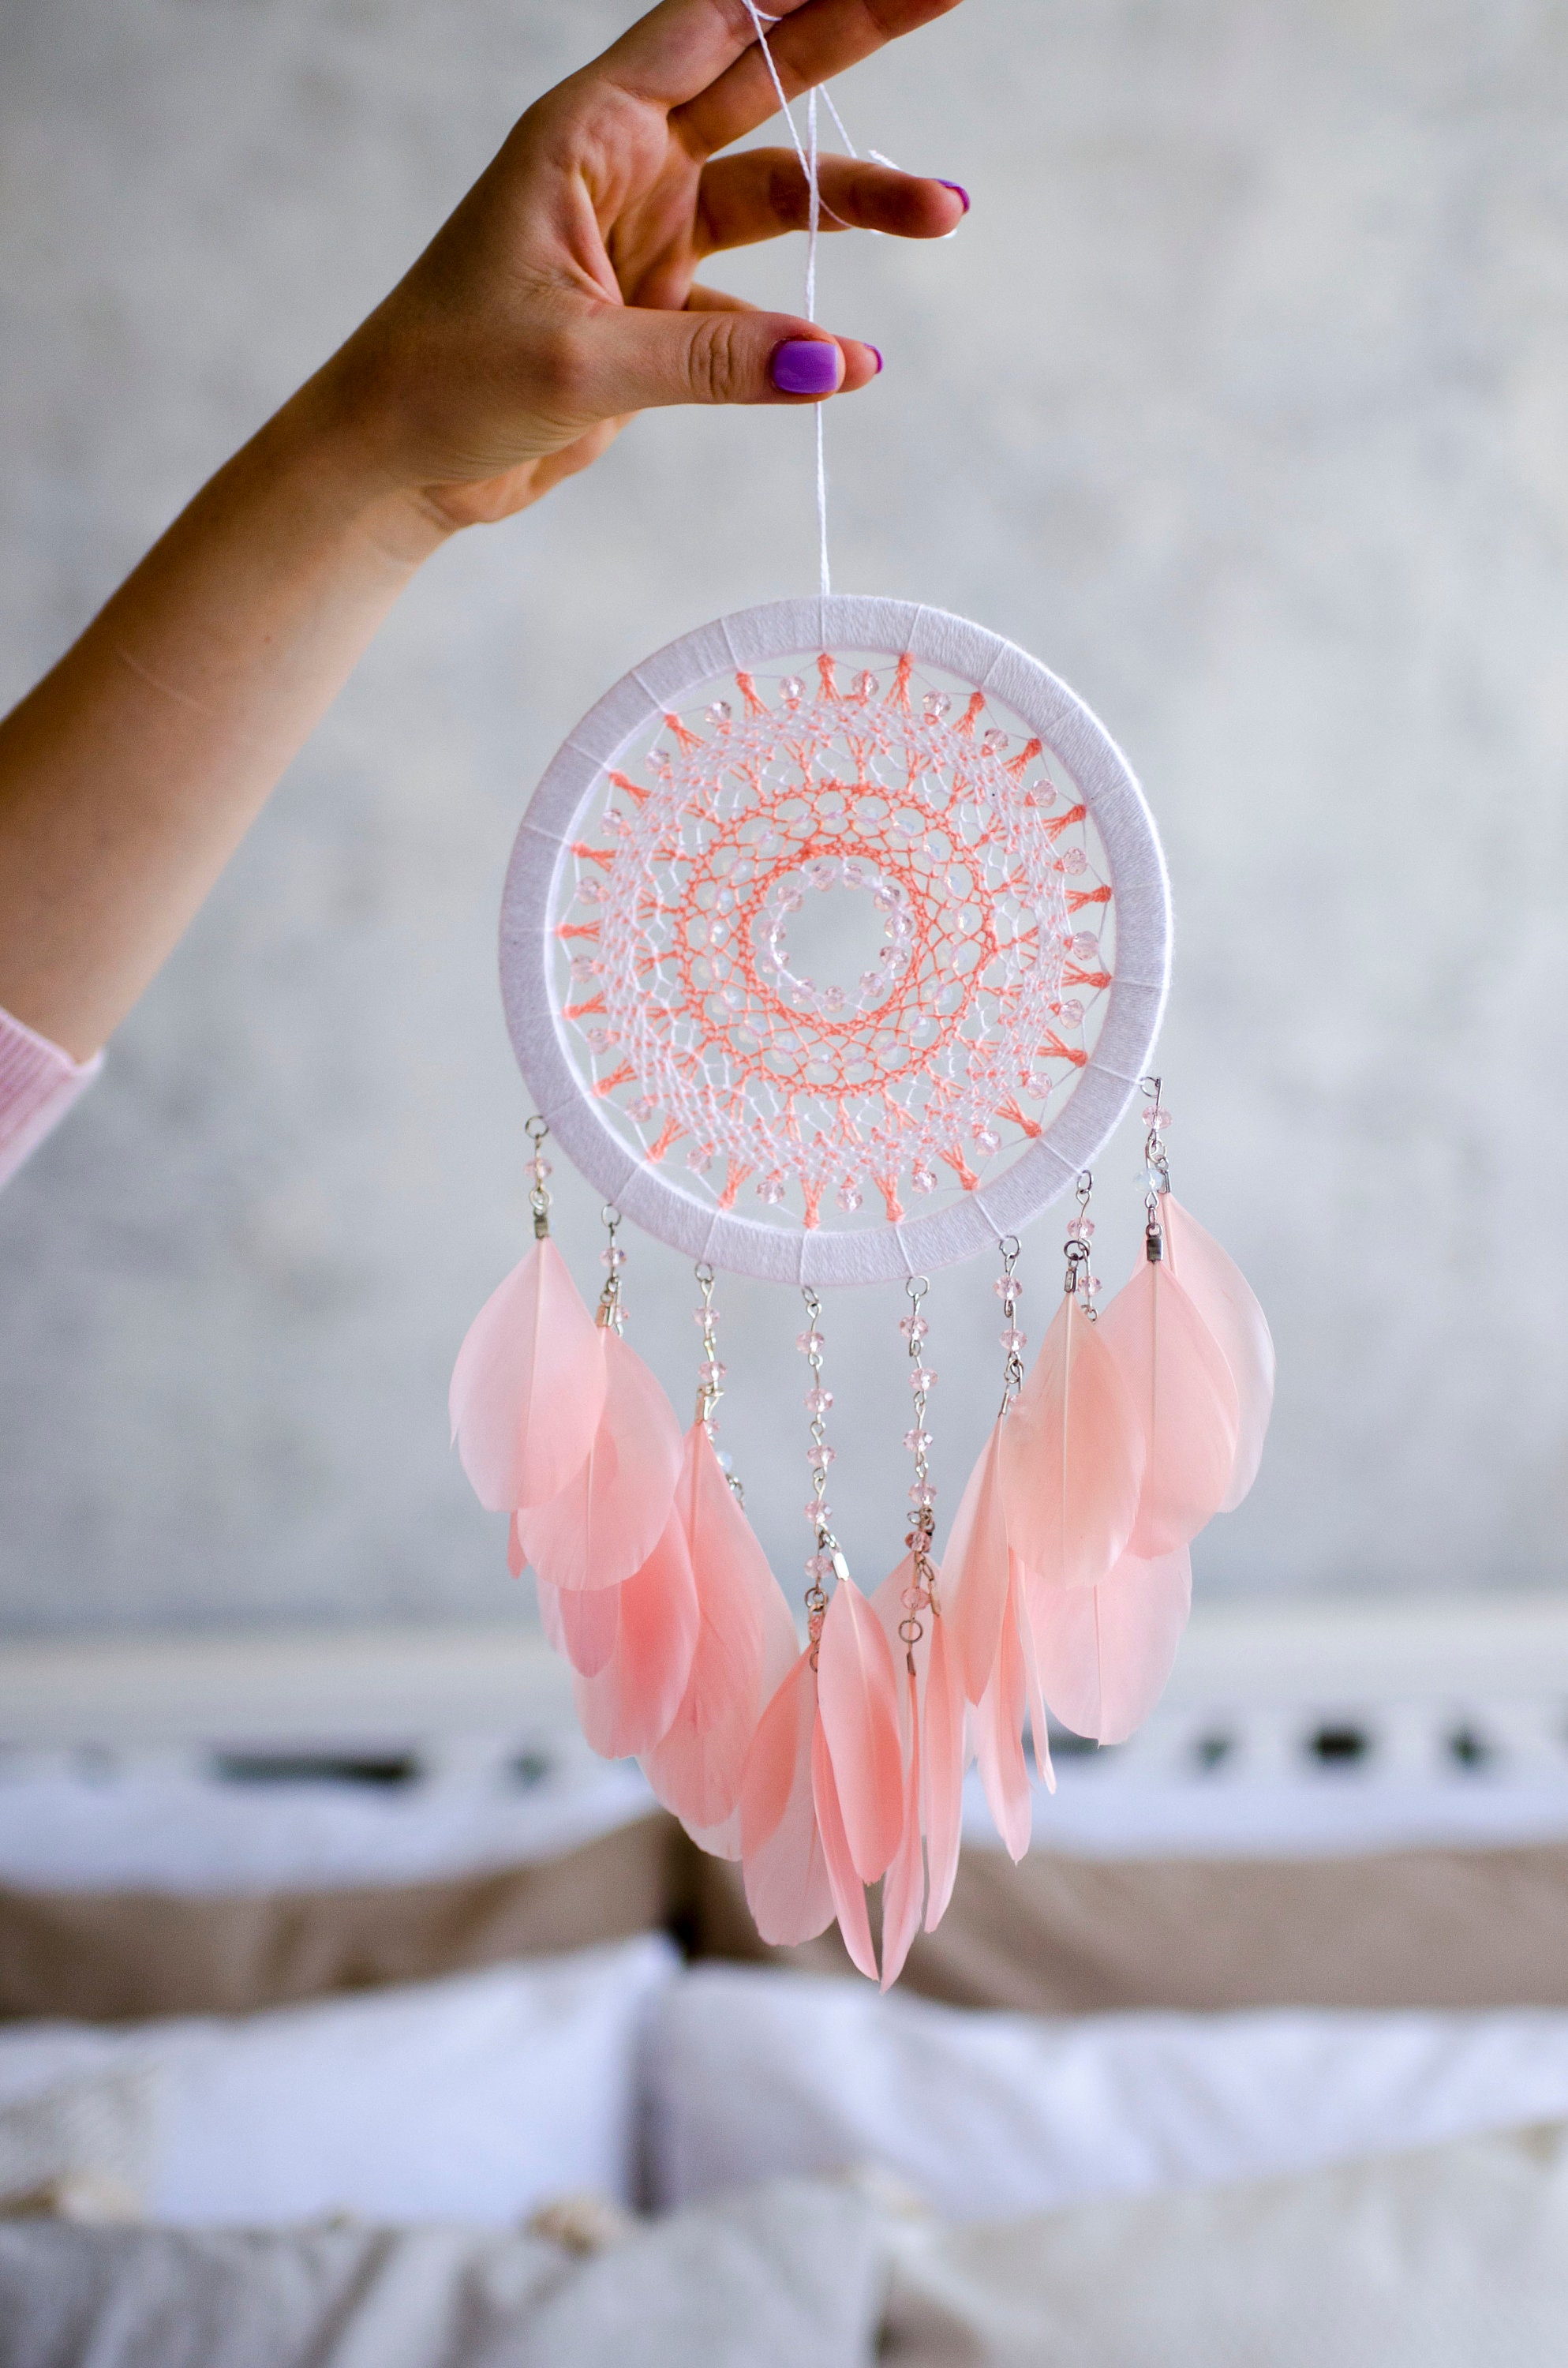 Cute Pink Crystal Bead Bracelet Flower Dream Catcher Charm